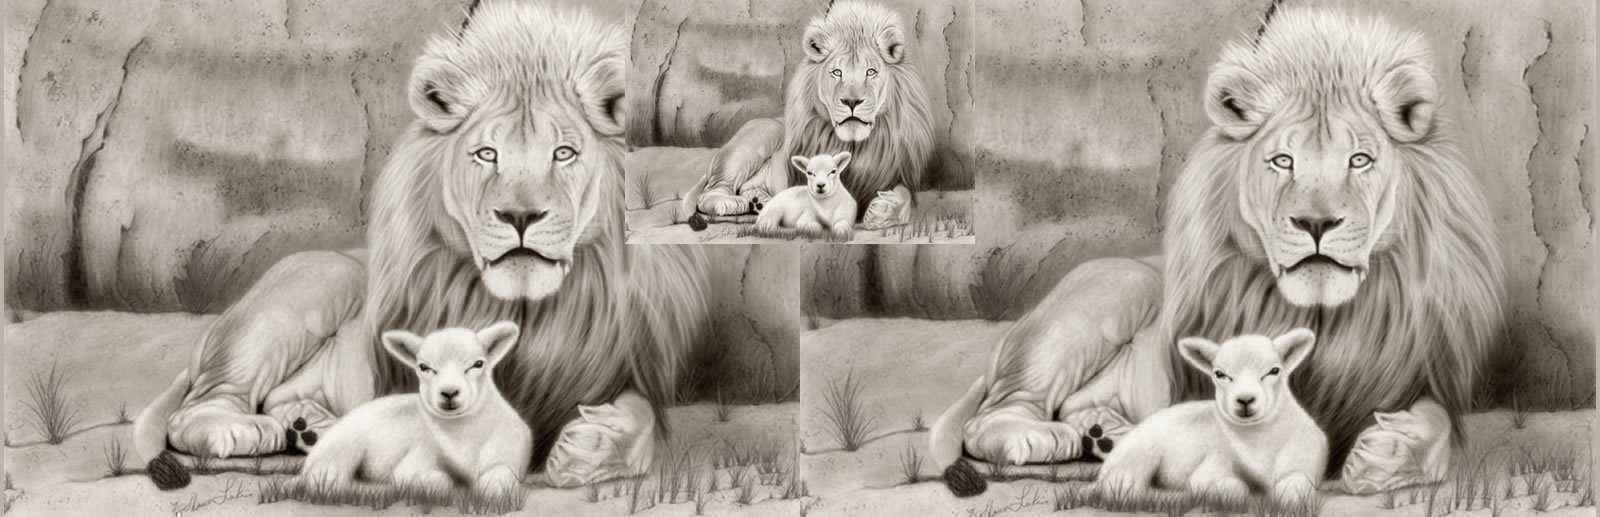 Illustration : Lion and Lamb